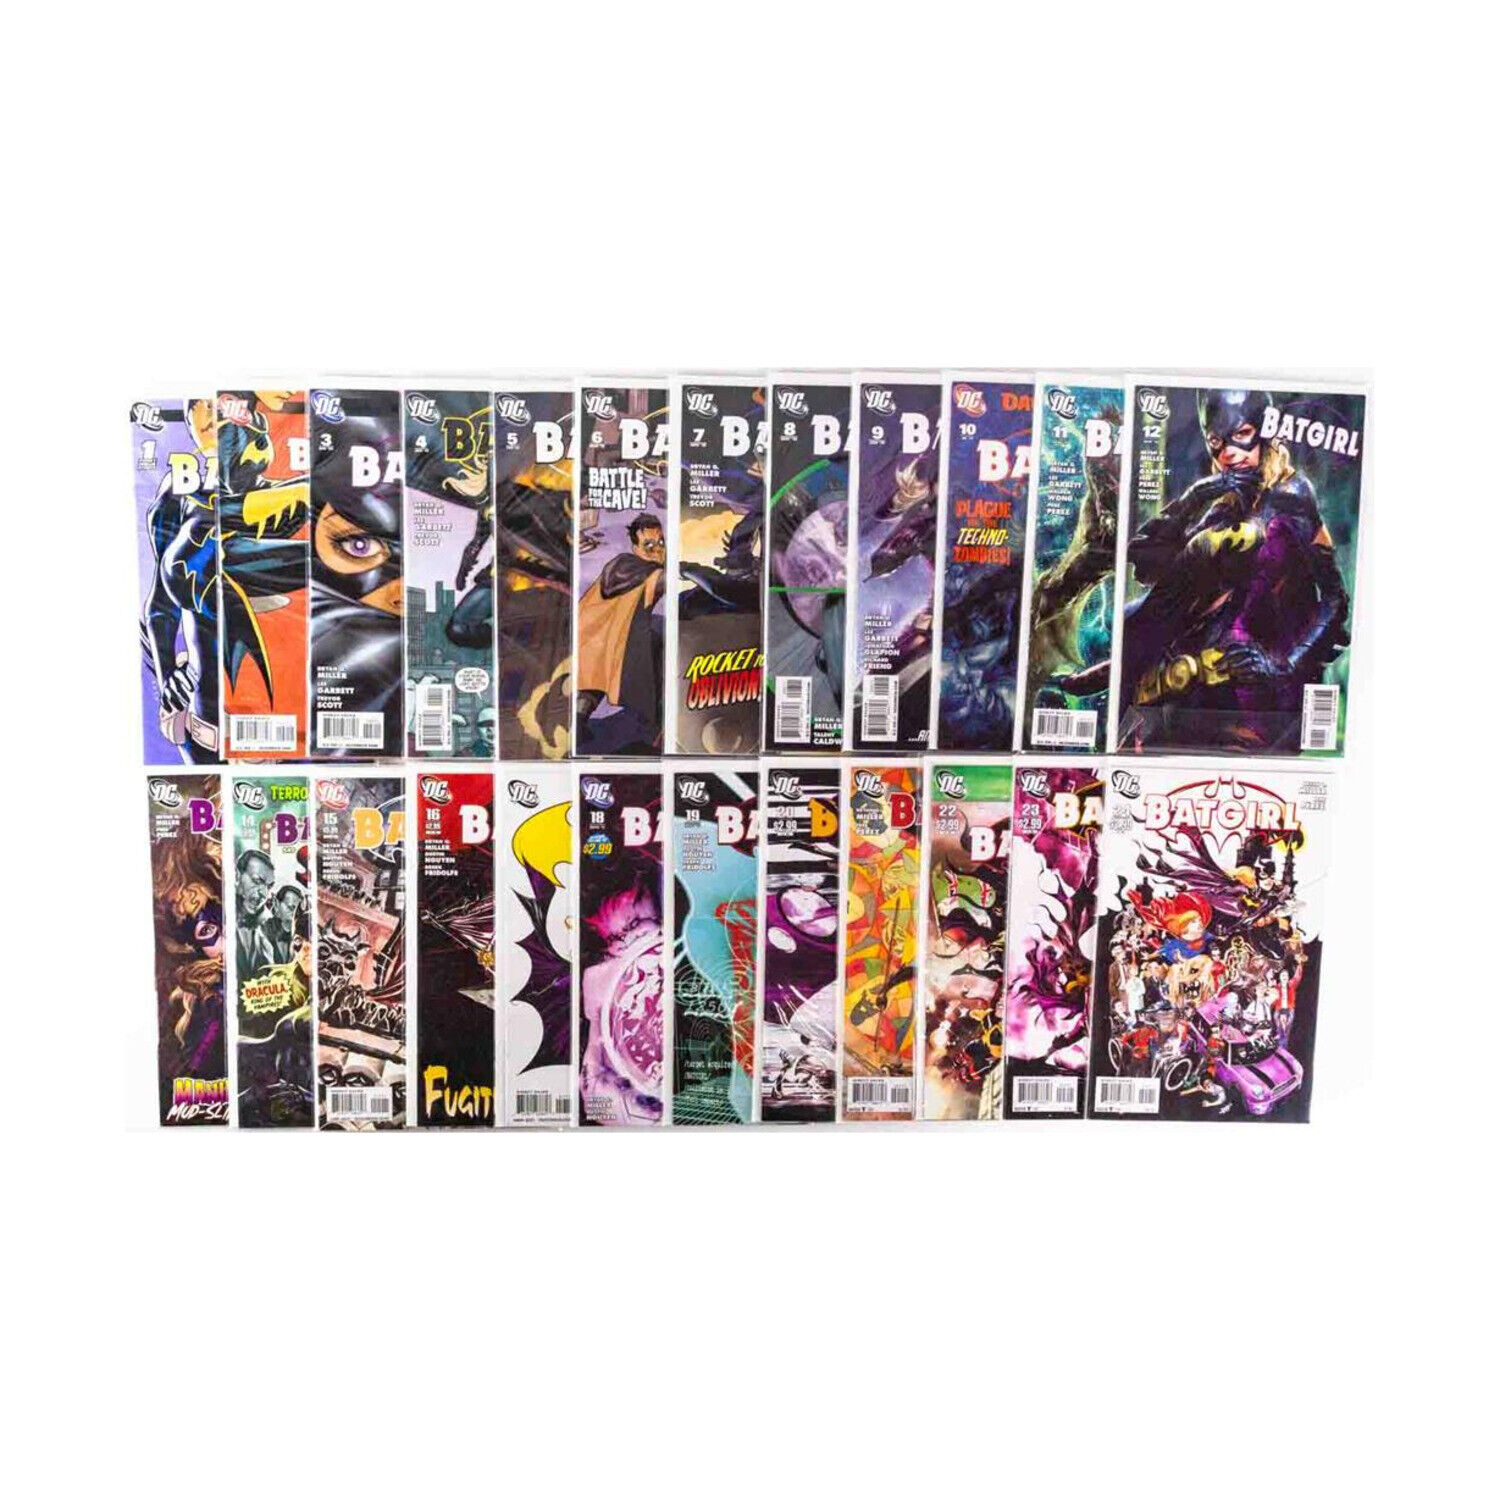 Vertigo Batgirl Batgirl 3rd Series Complete Collection - Issues #1-24 EX